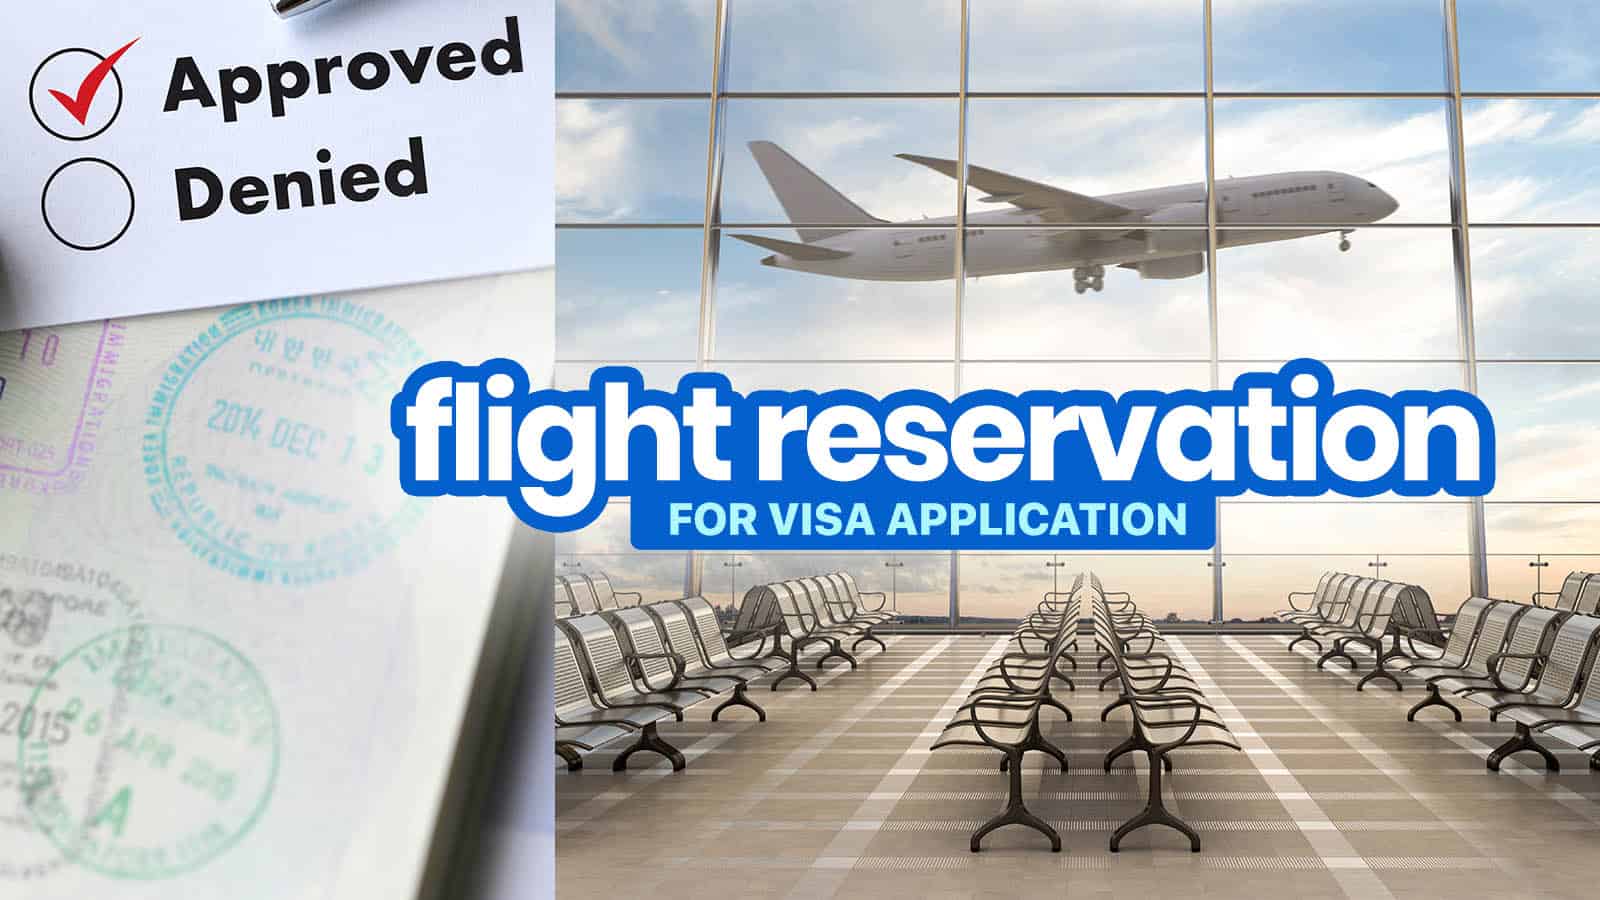 philippine passport tourist visa to canada